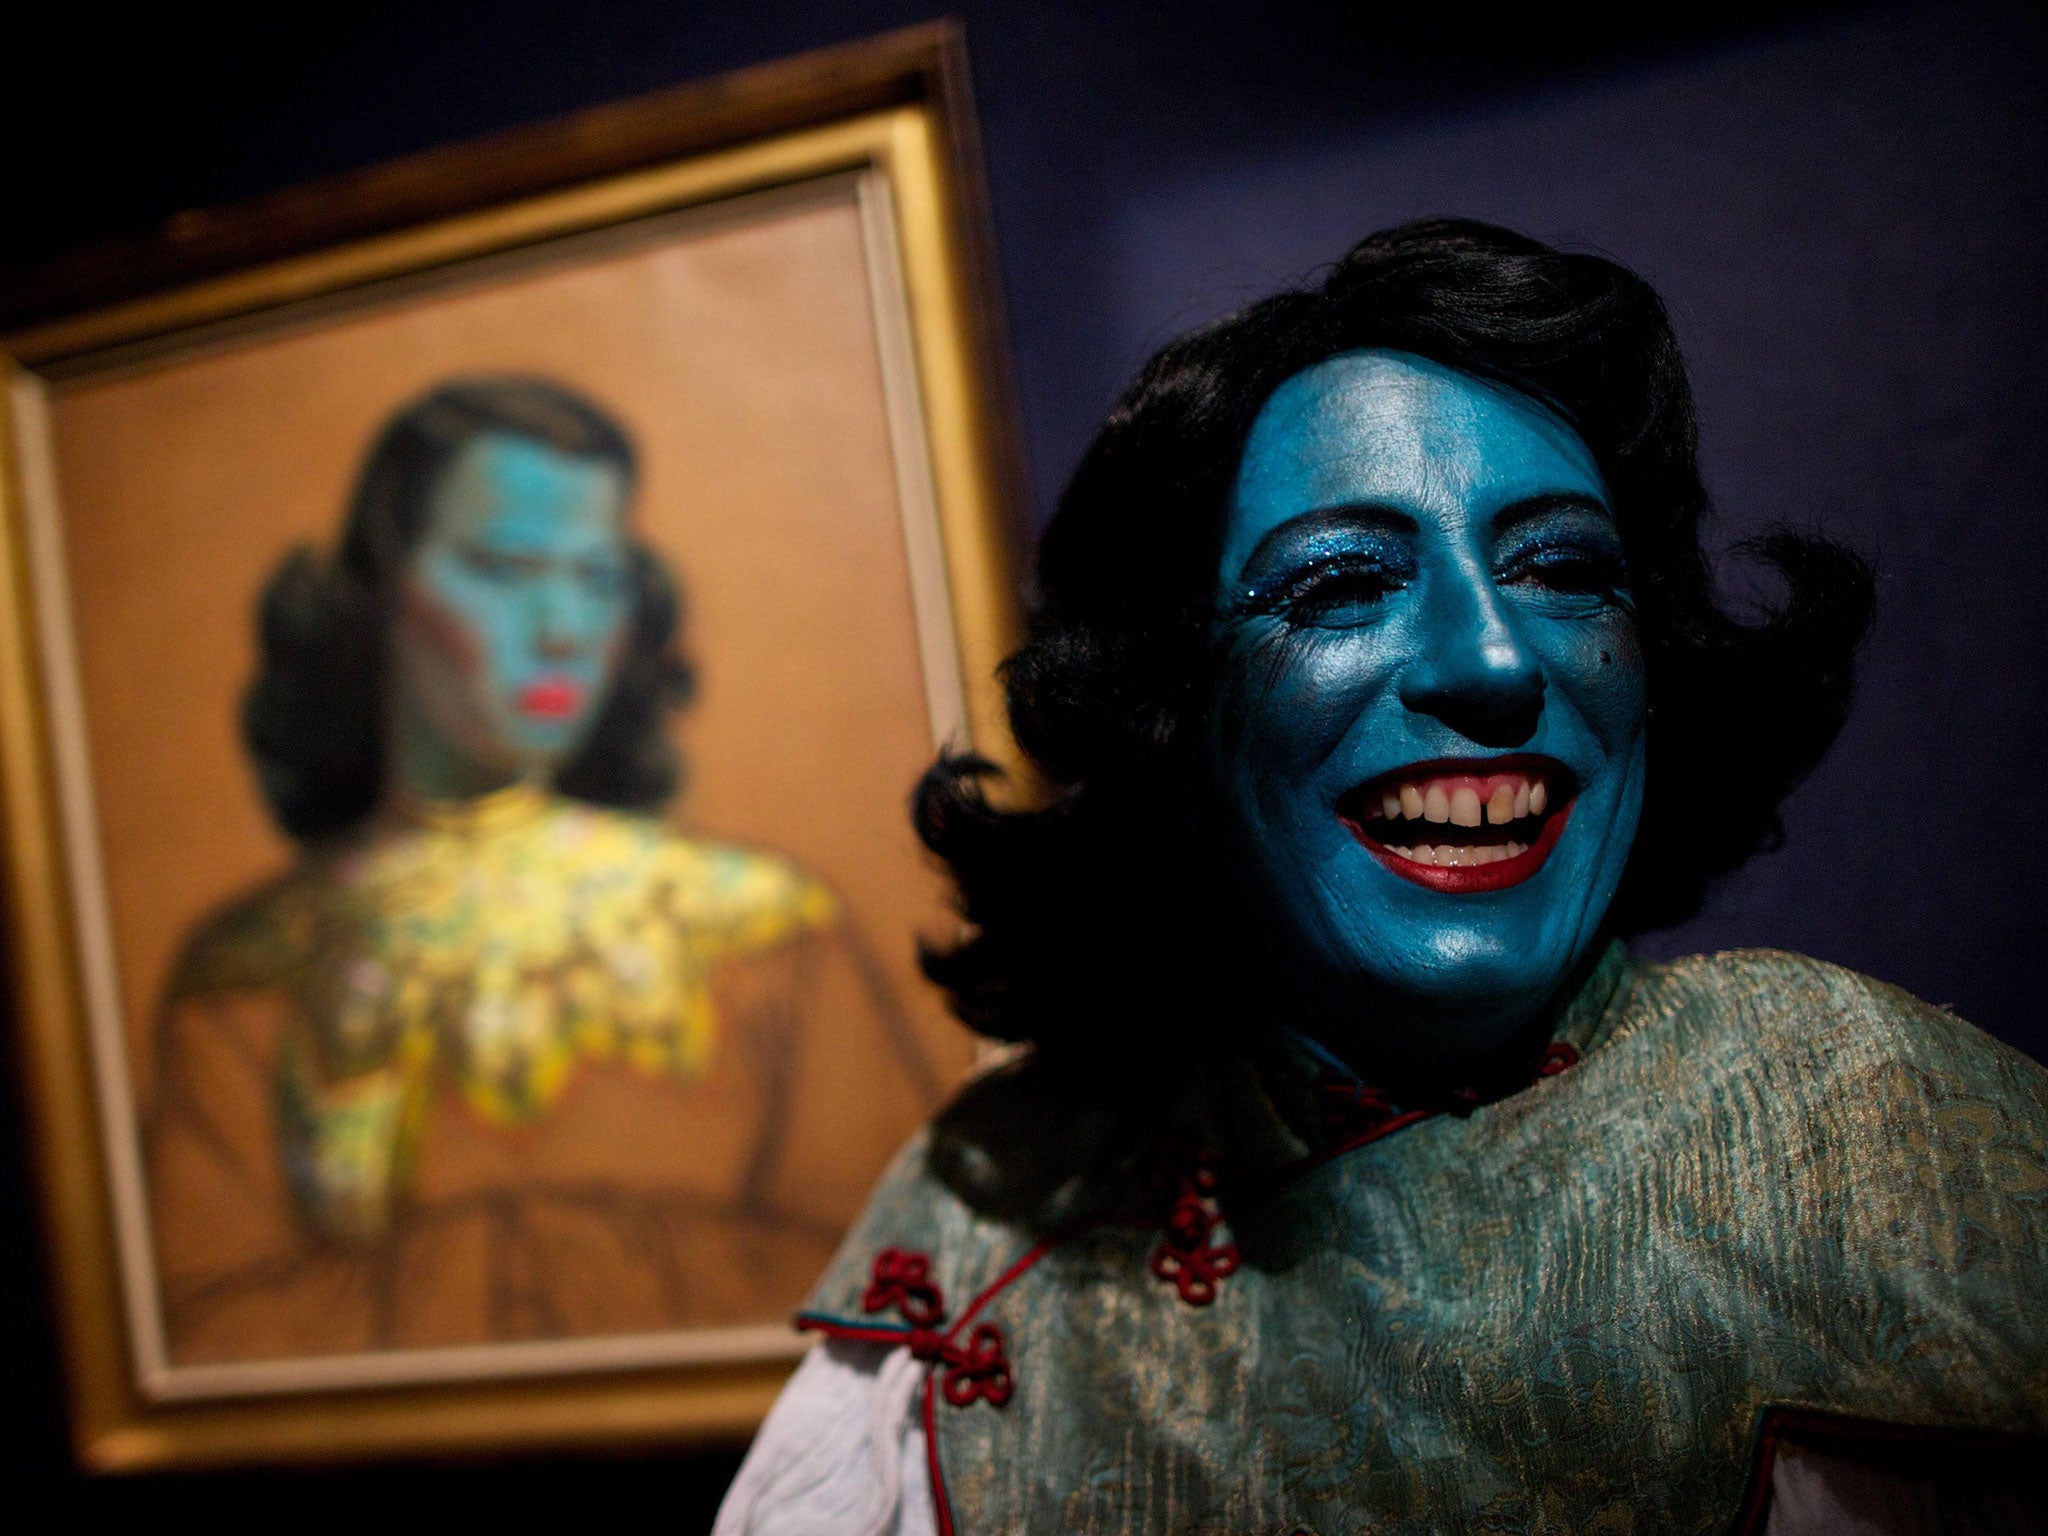 Cabaret singer Tricity Vogue dressed as the blue lady